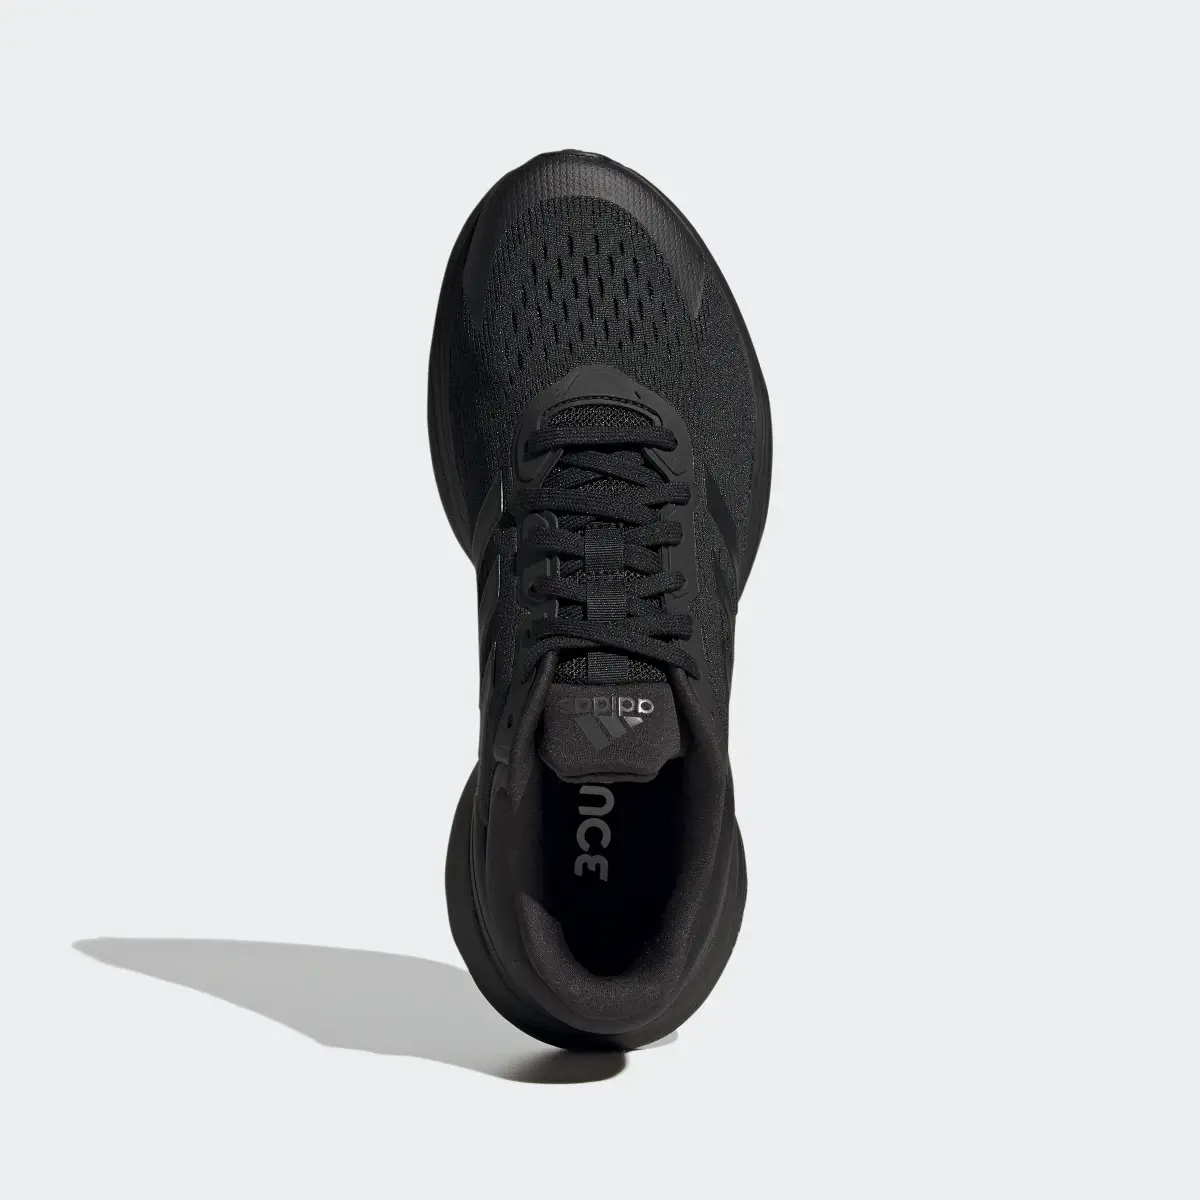 Adidas Response Super 3.0 Running Shoes. 3